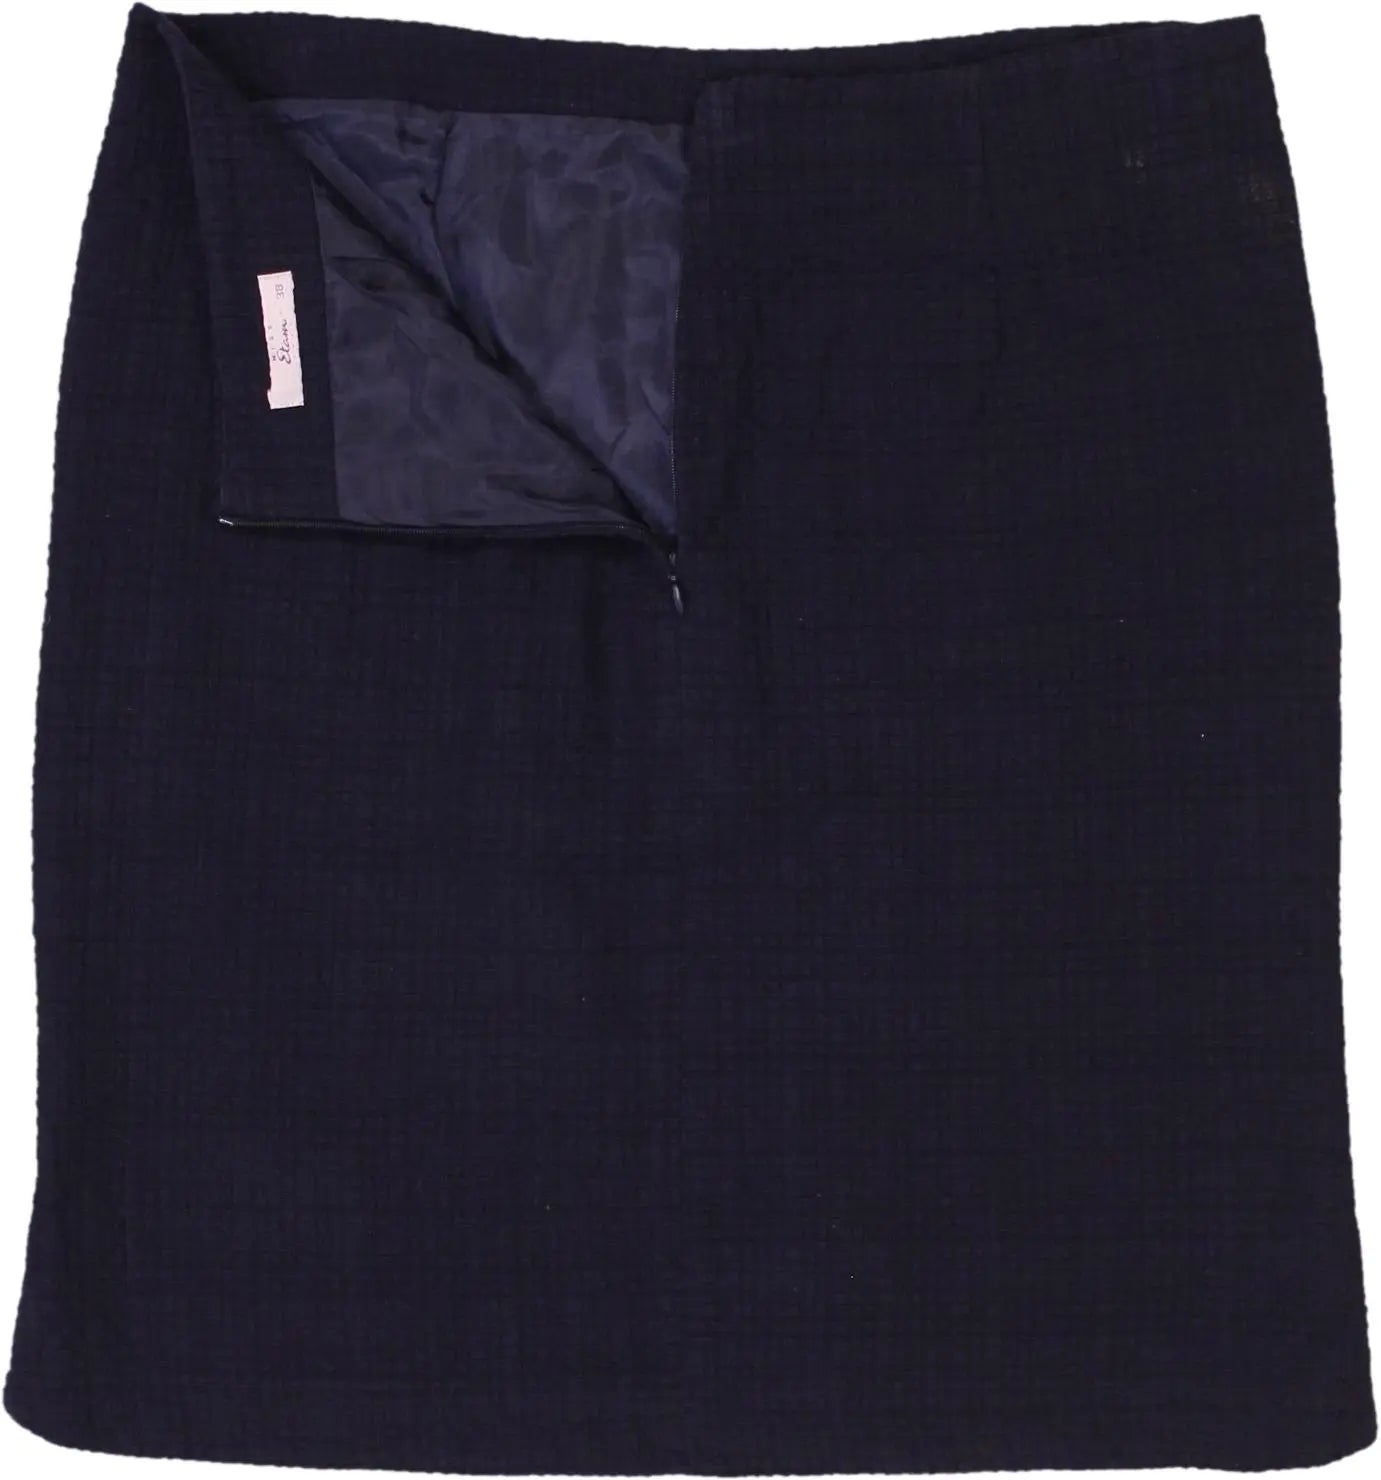 Miss Etam - Pencil Skirt- ThriftTale.com - Vintage and second handclothing